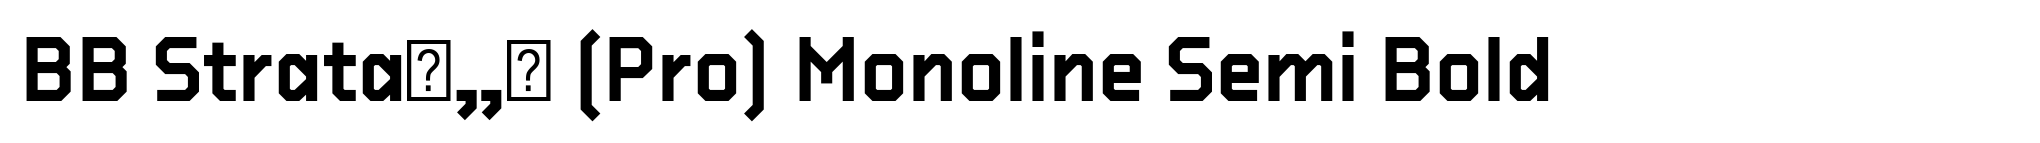 BB Strataв„ў (Pro) Monoline Semi Bold image